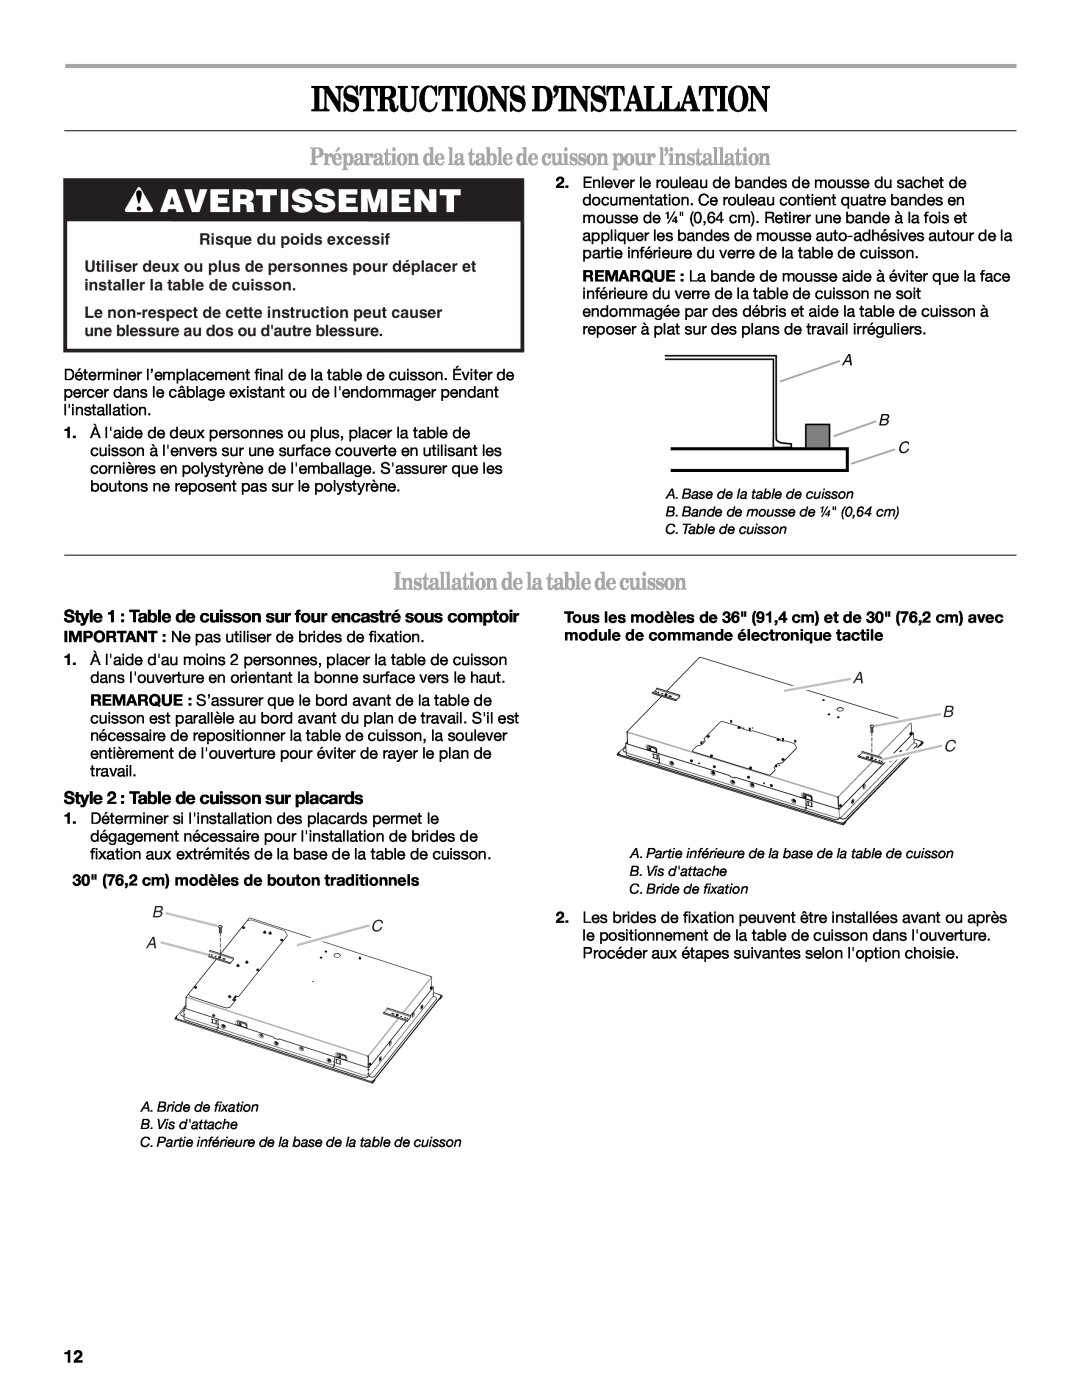 Whirlpool W10346695A Instructions D’Installation, Installation de la tablede cuisson, Avertissement, A B C, B C A 